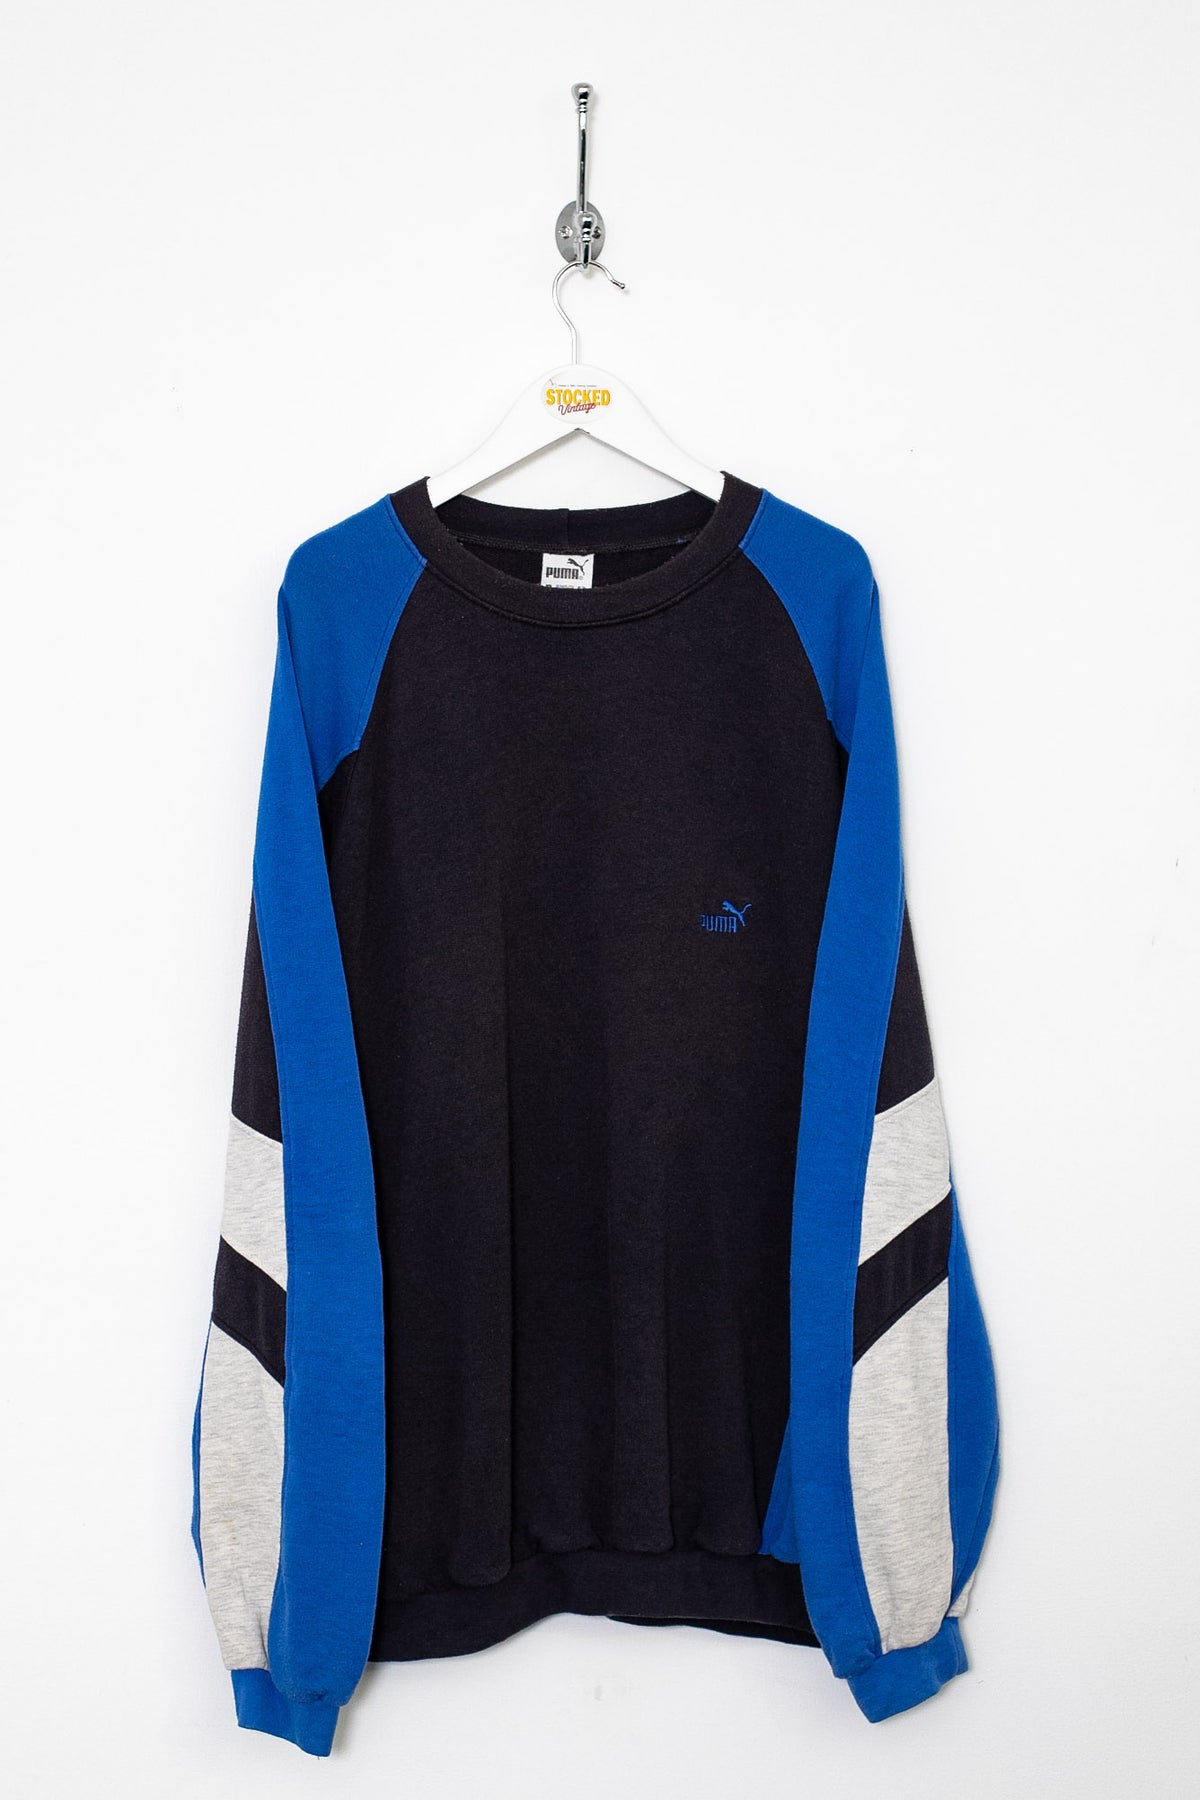 90s Puma Sweatshirt (XXL)